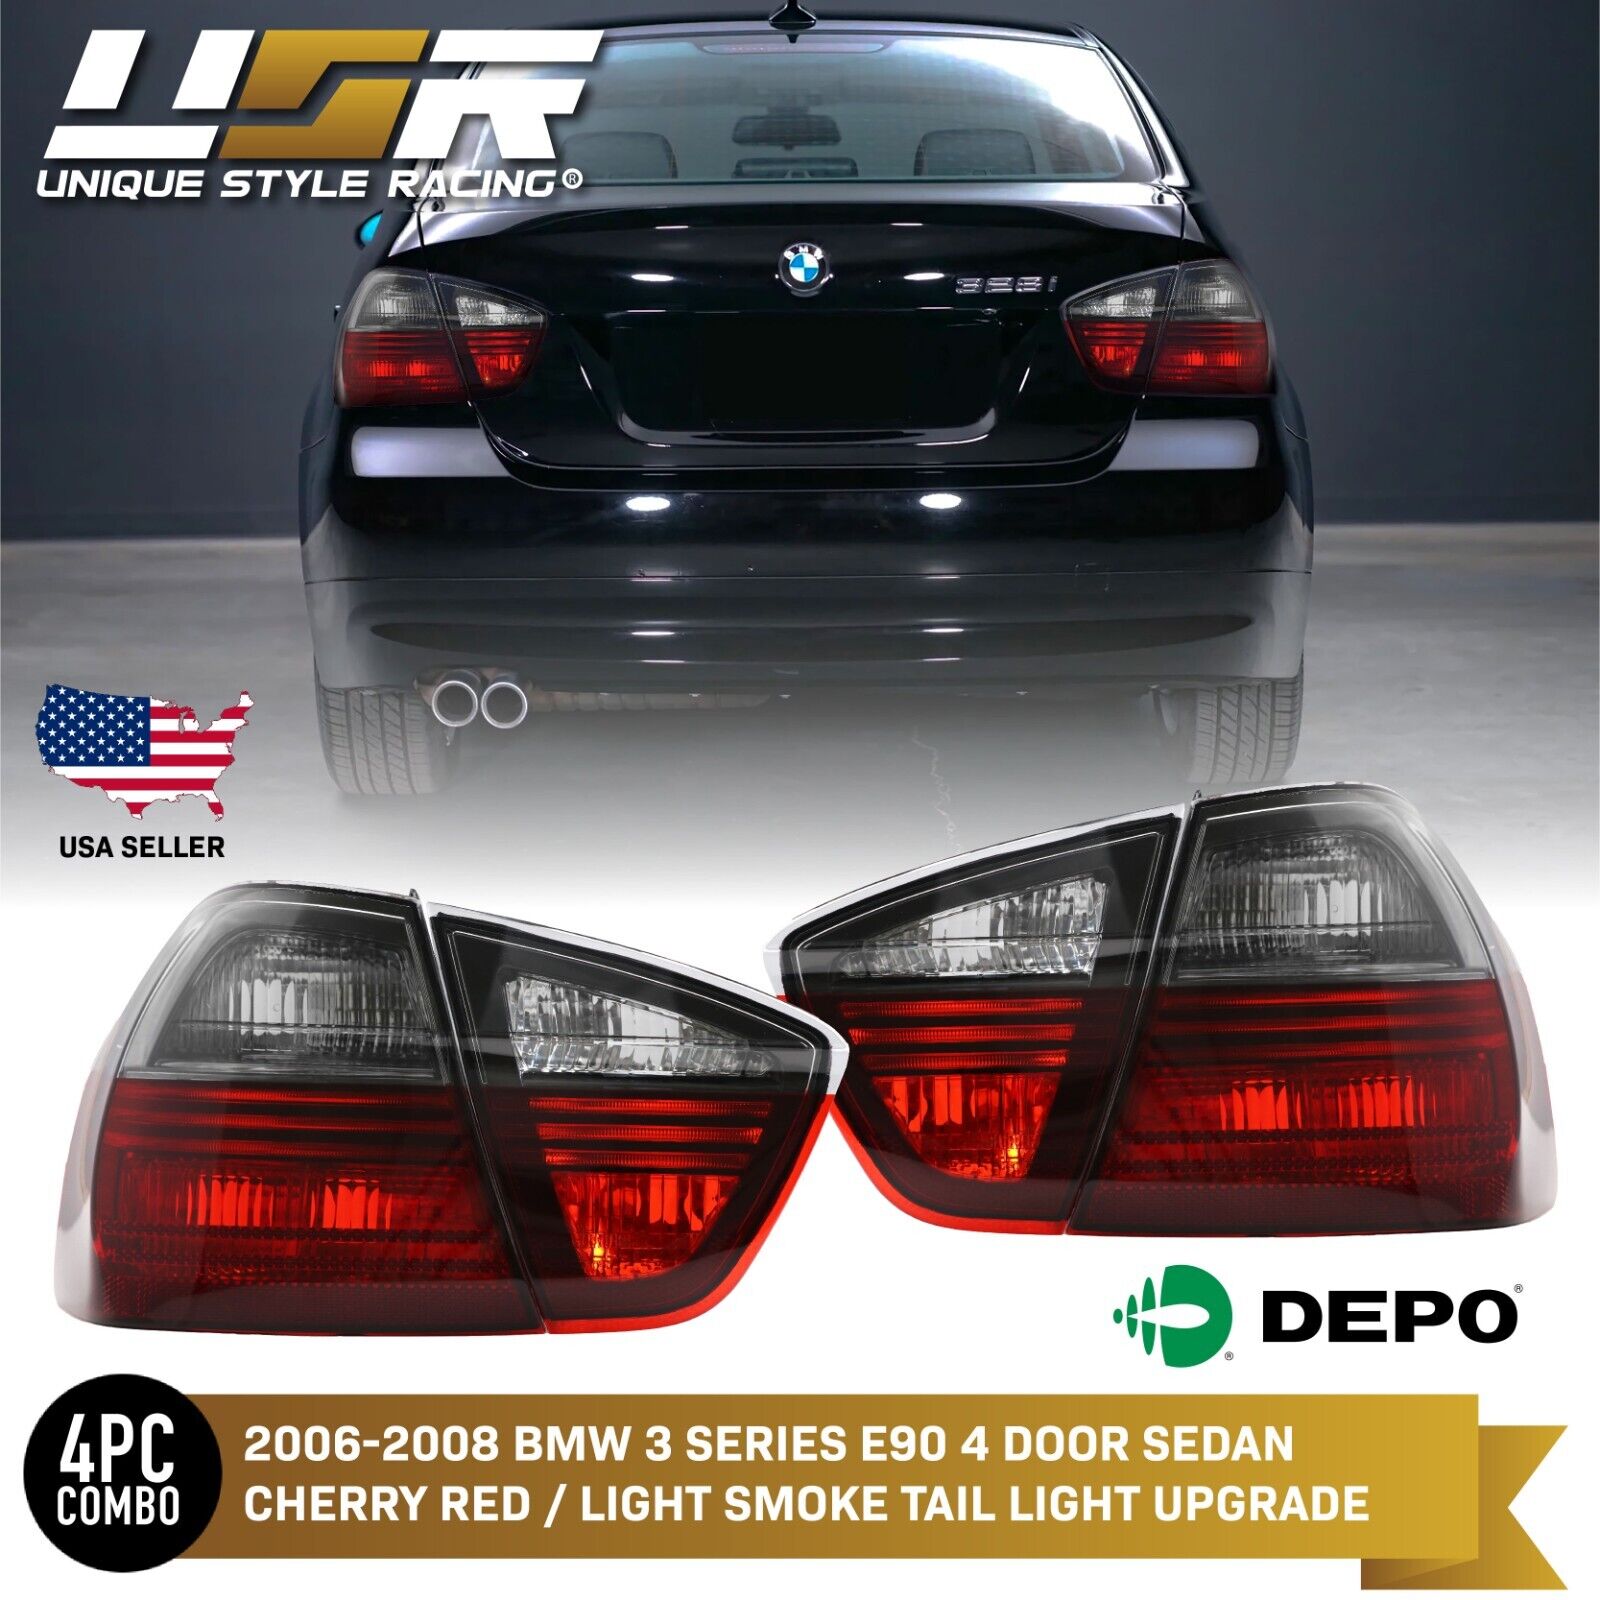 DEPO Euro Cherry Red Light Smoke Rear Tail Light Pair For 06-08 BMW E90 4D Sedan